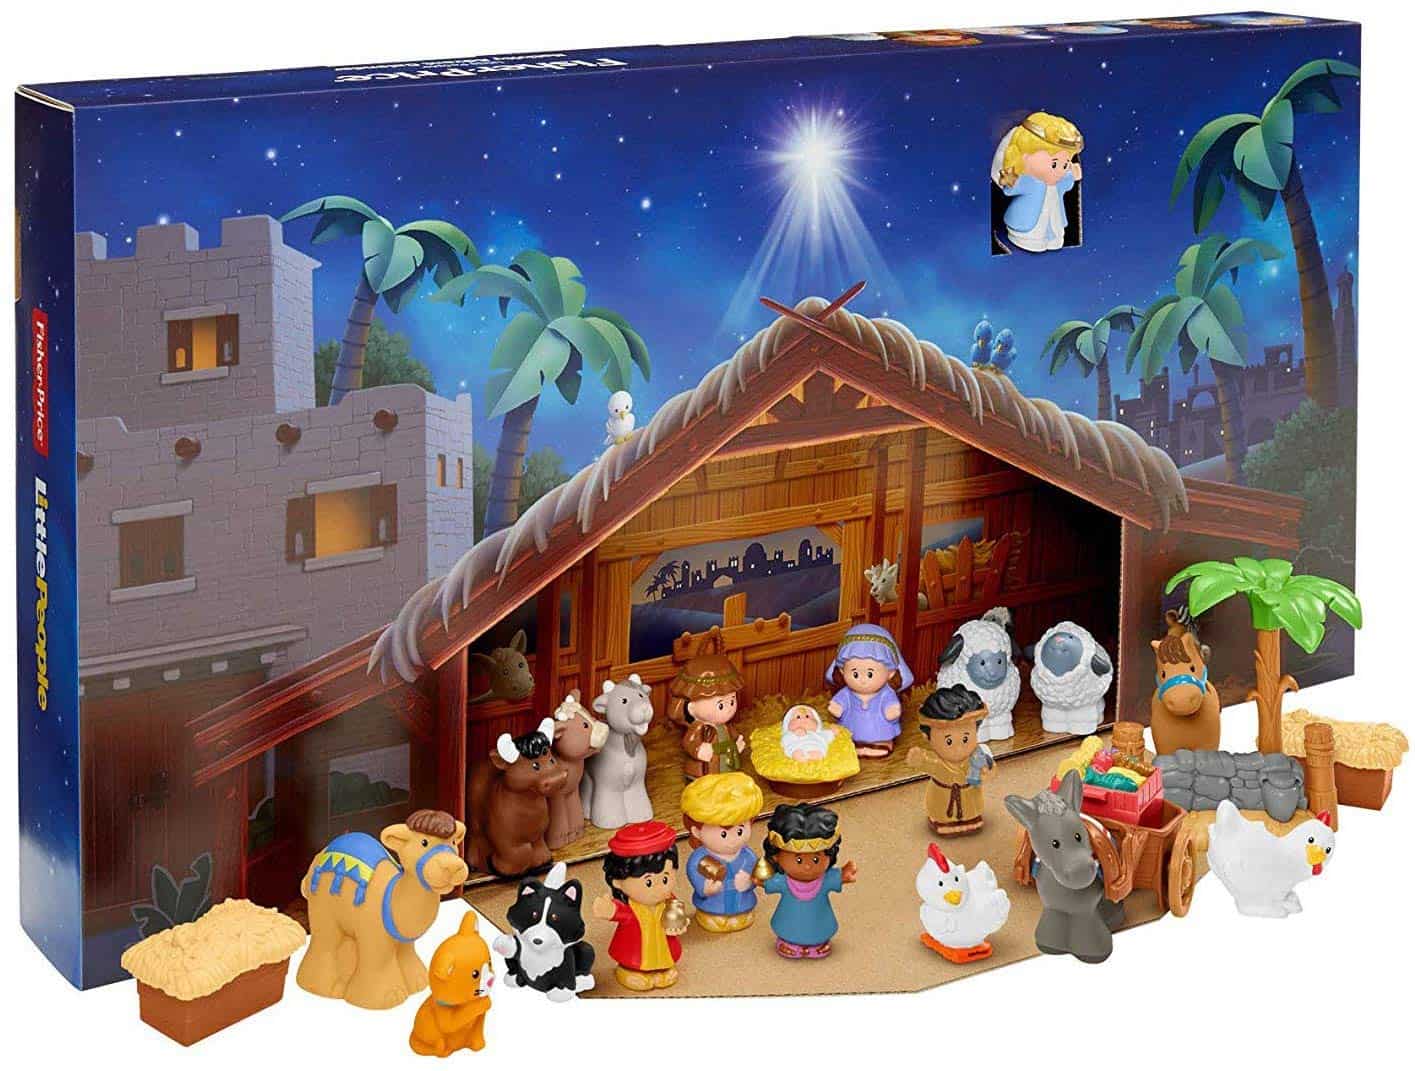 Little People Nativity Advent Calendar